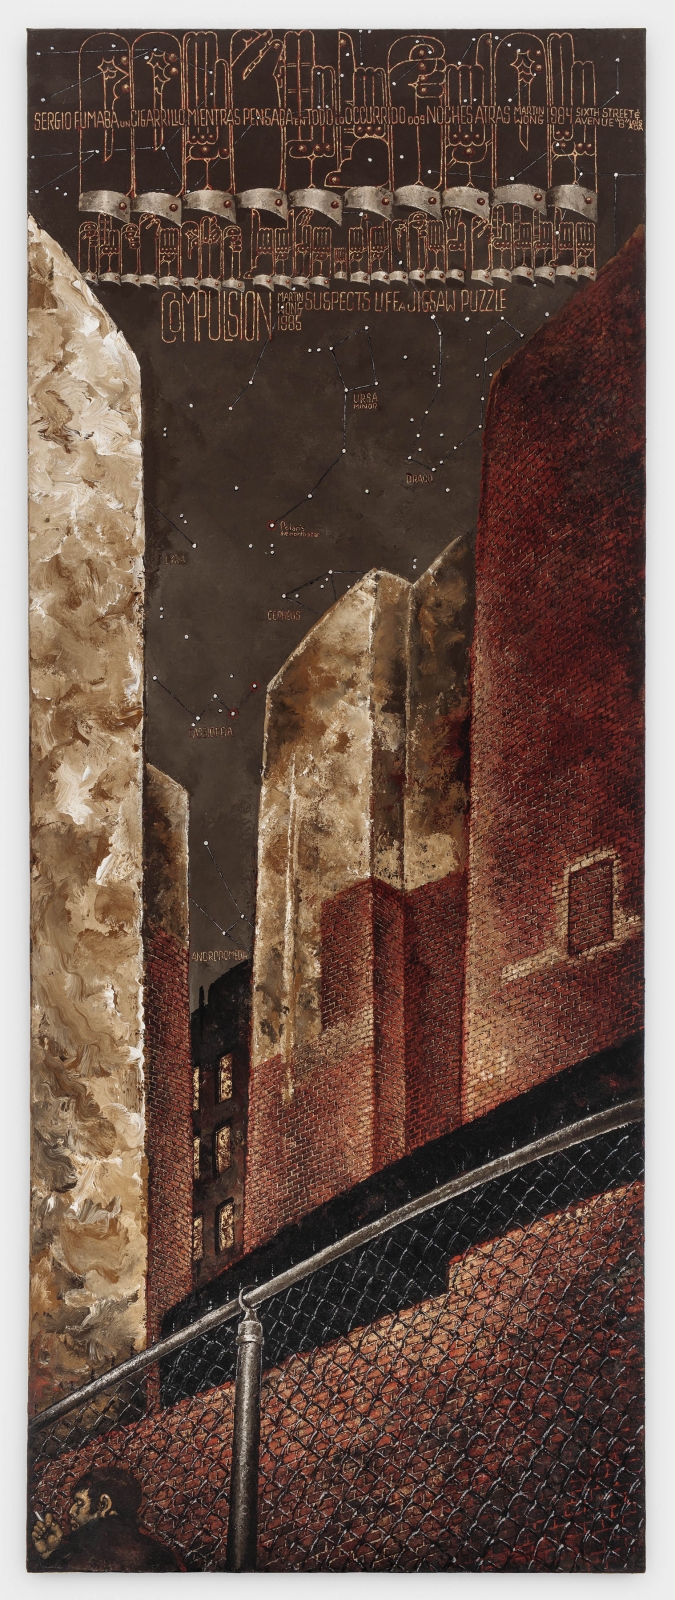 Martin Wong
Compulsion, 1985
acrylic on linen
119 x 48 ins.
302.3 x 121.9 cm